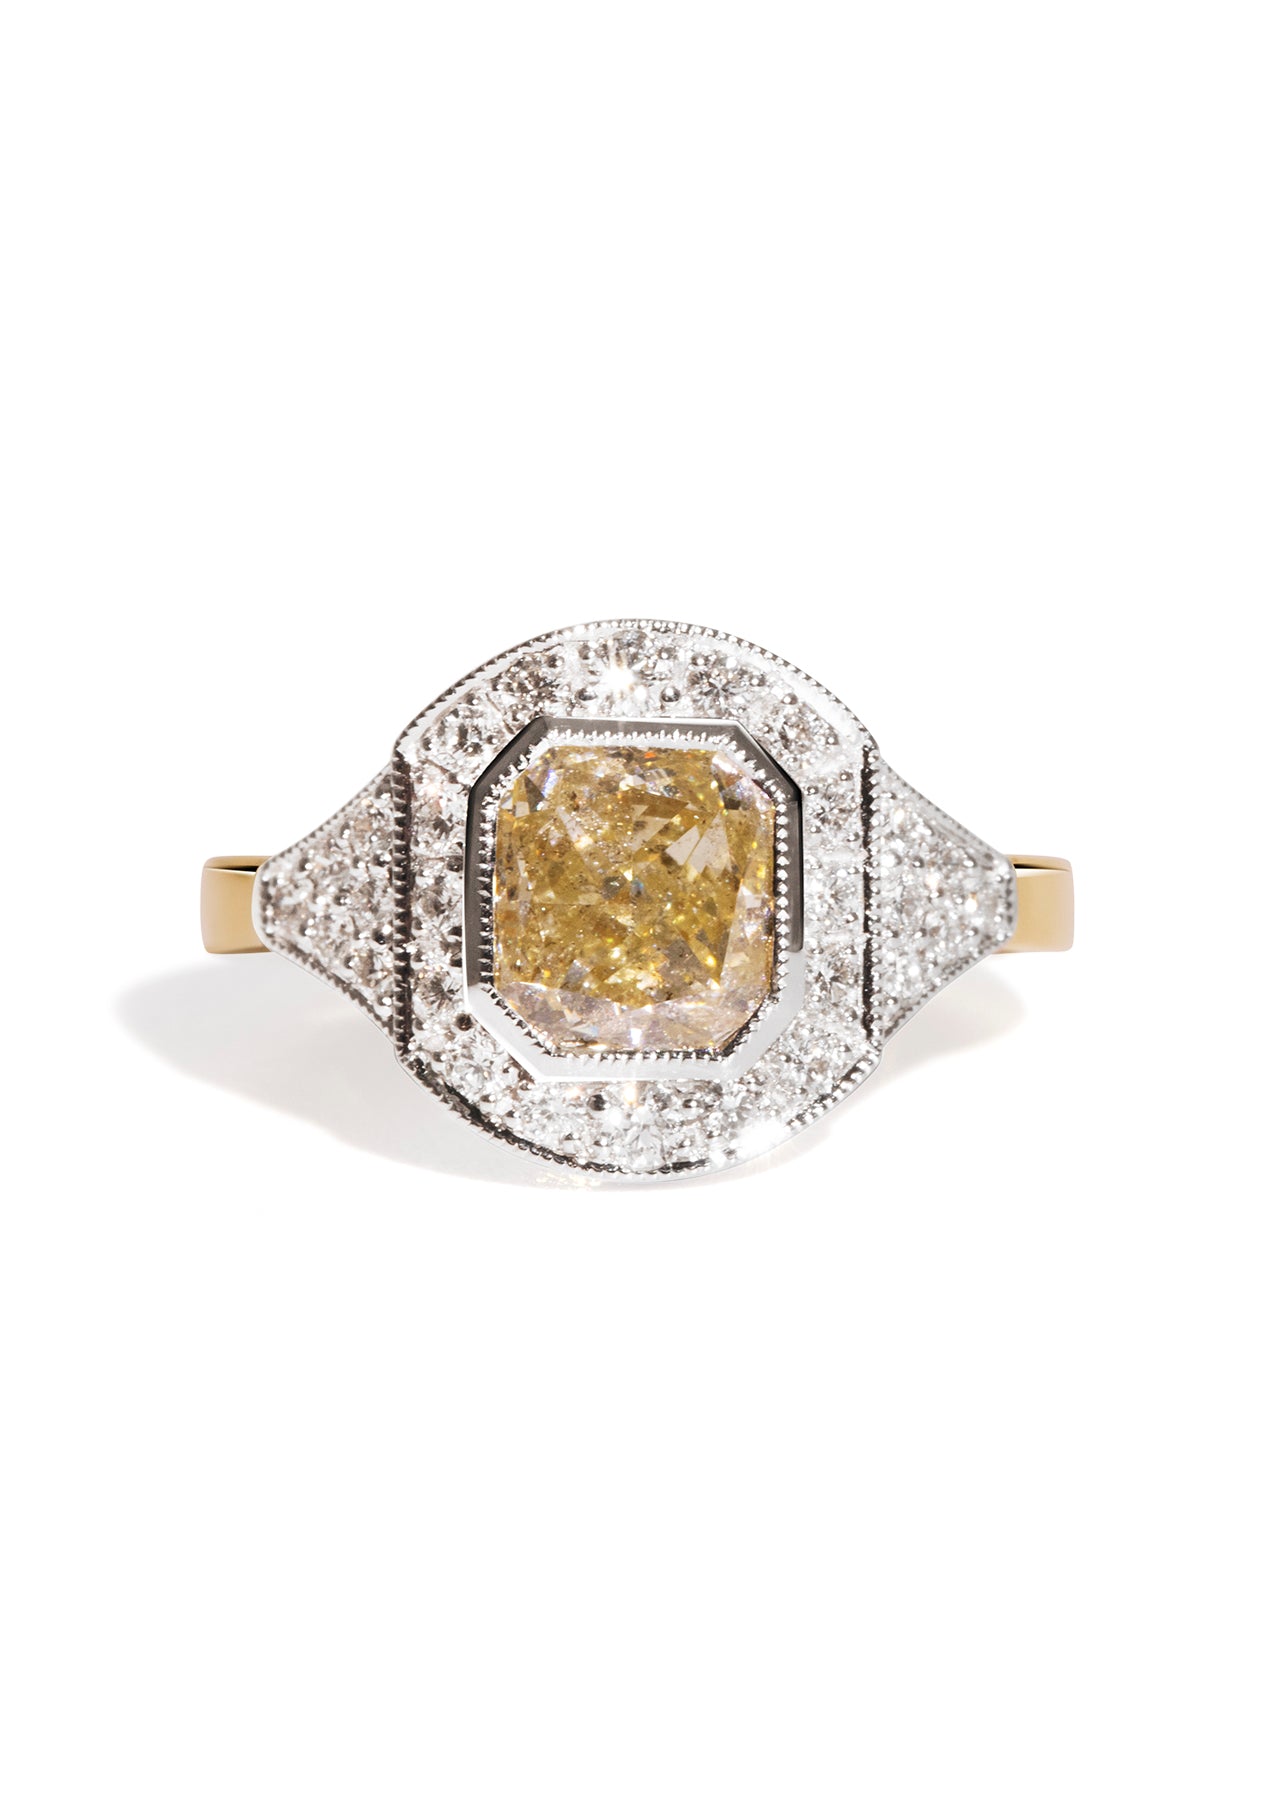 The Ebony Ring with 2.13ct Radiant Yellow Diamond